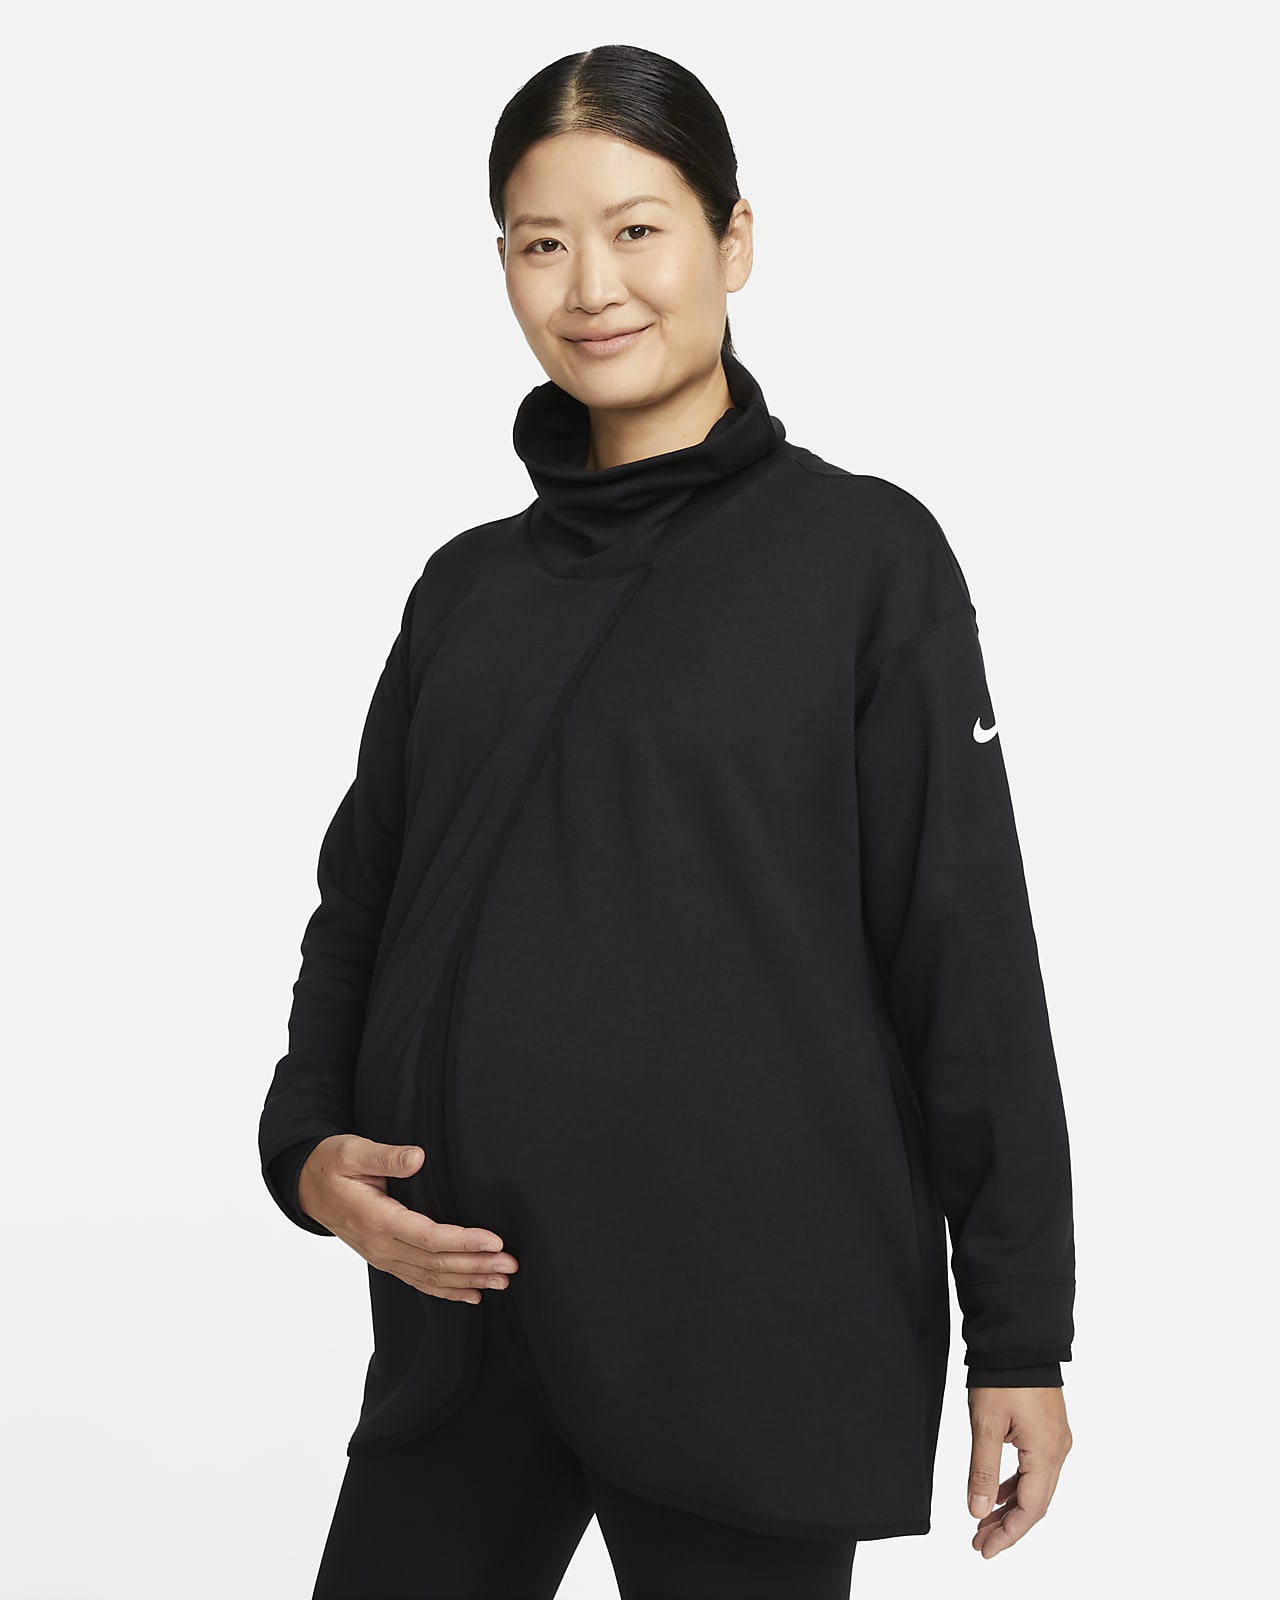 Nike (M) 여성 풀오버(임부복)